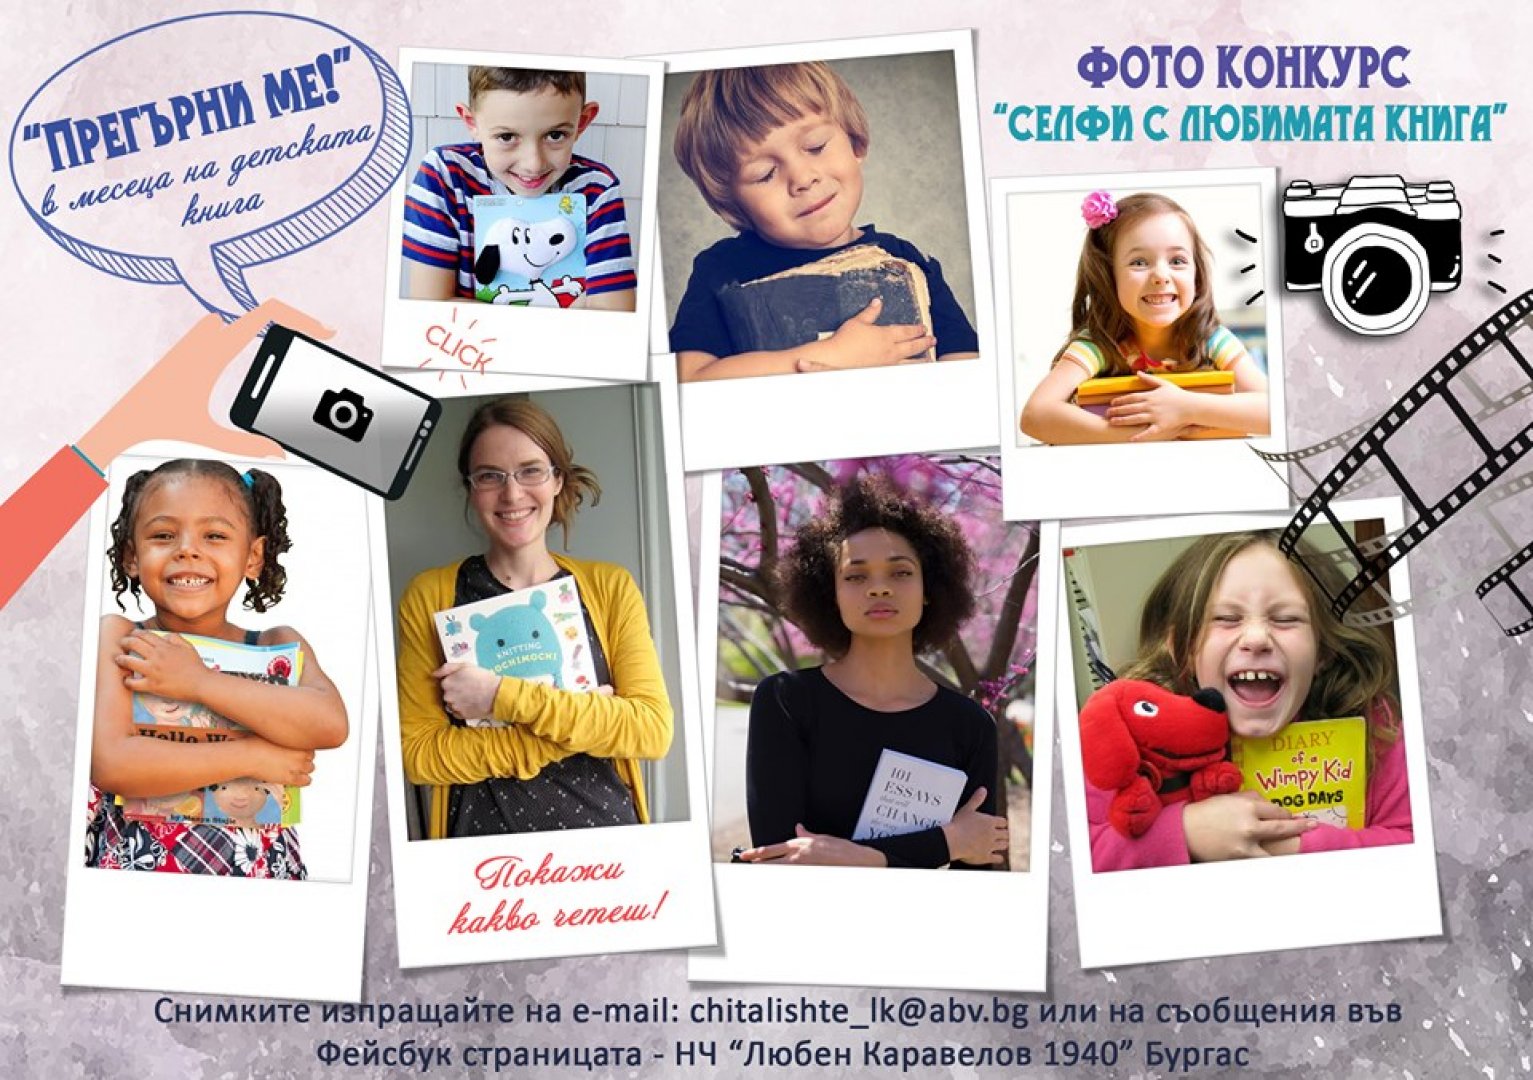 Бургаско читалище обяви ученически конкурс за селфи с любима книга - E-Burgas.com